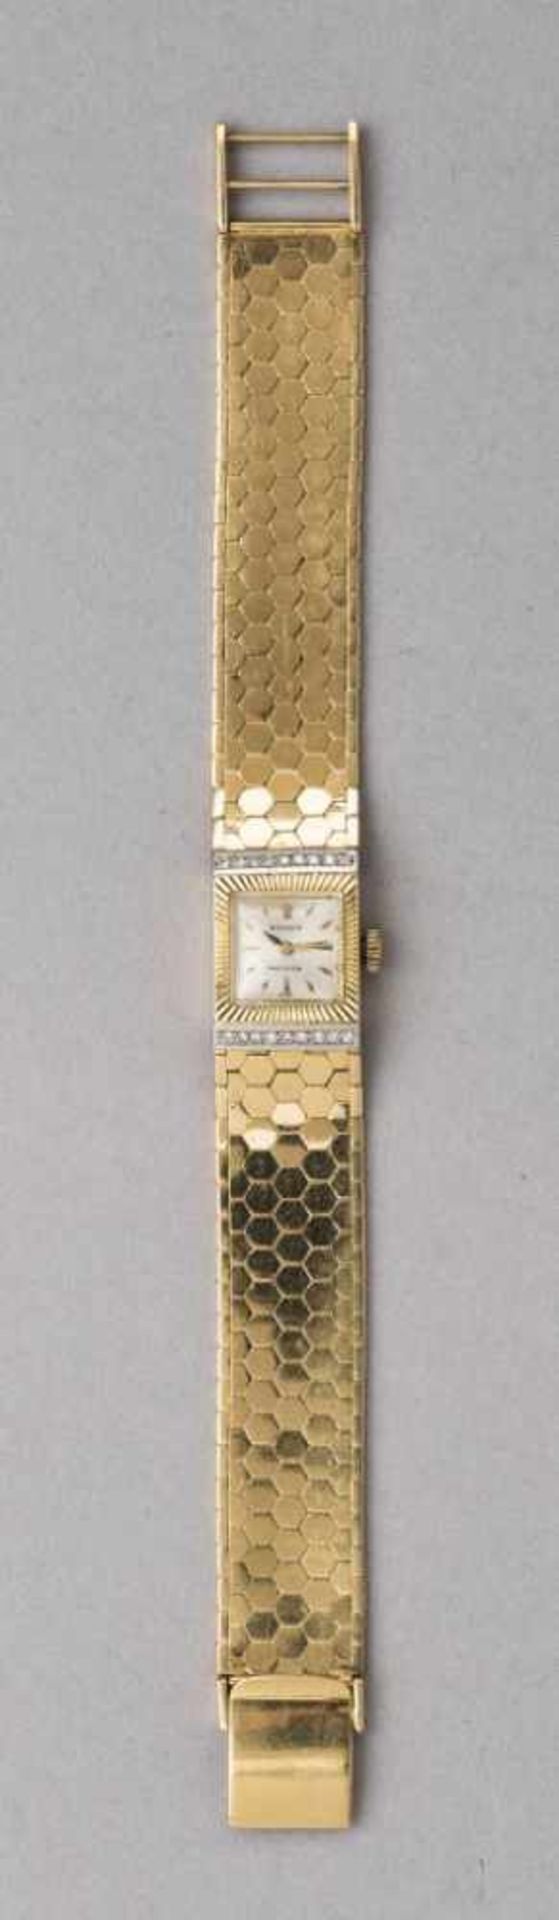 Goldene Rolex-Damenarmbanduhr, 18 ct. Modell Cellini. Massives Karreegehäuse. Lunette strahlenförmig - Bild 2 aus 2